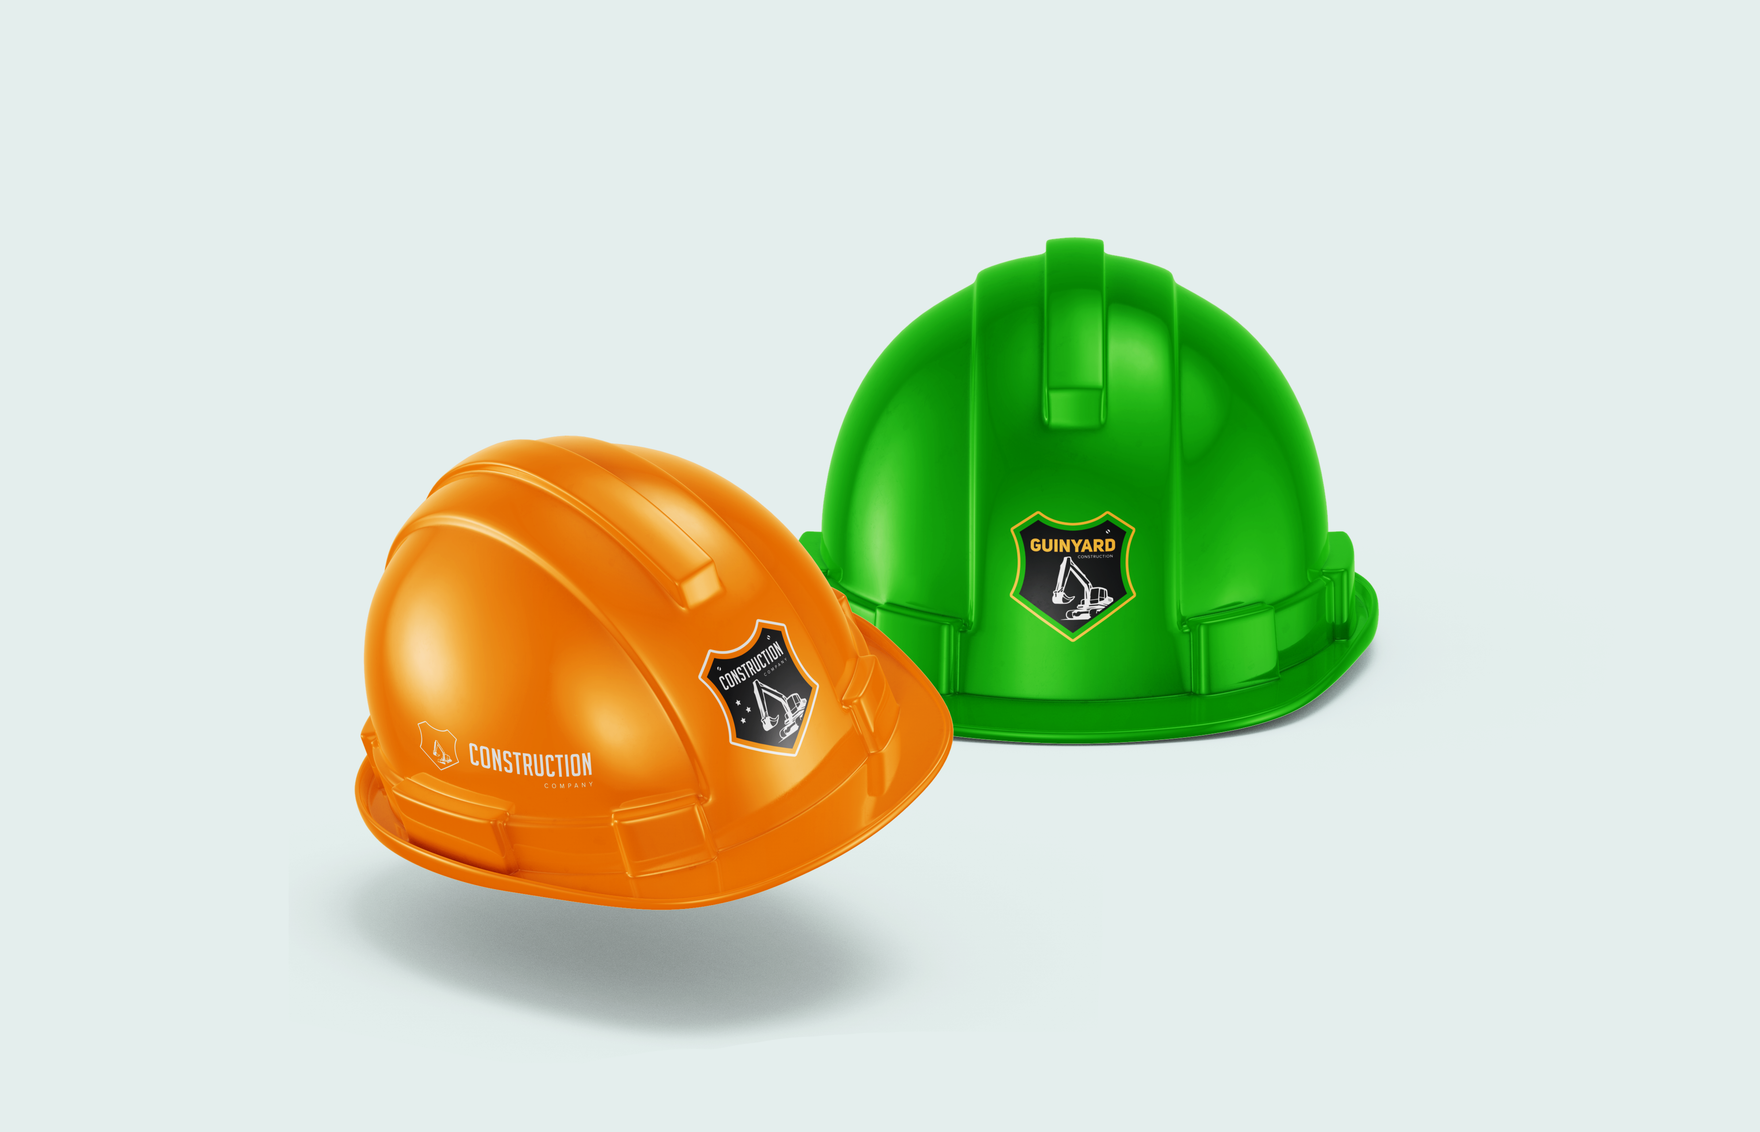 Construction Badge Logo